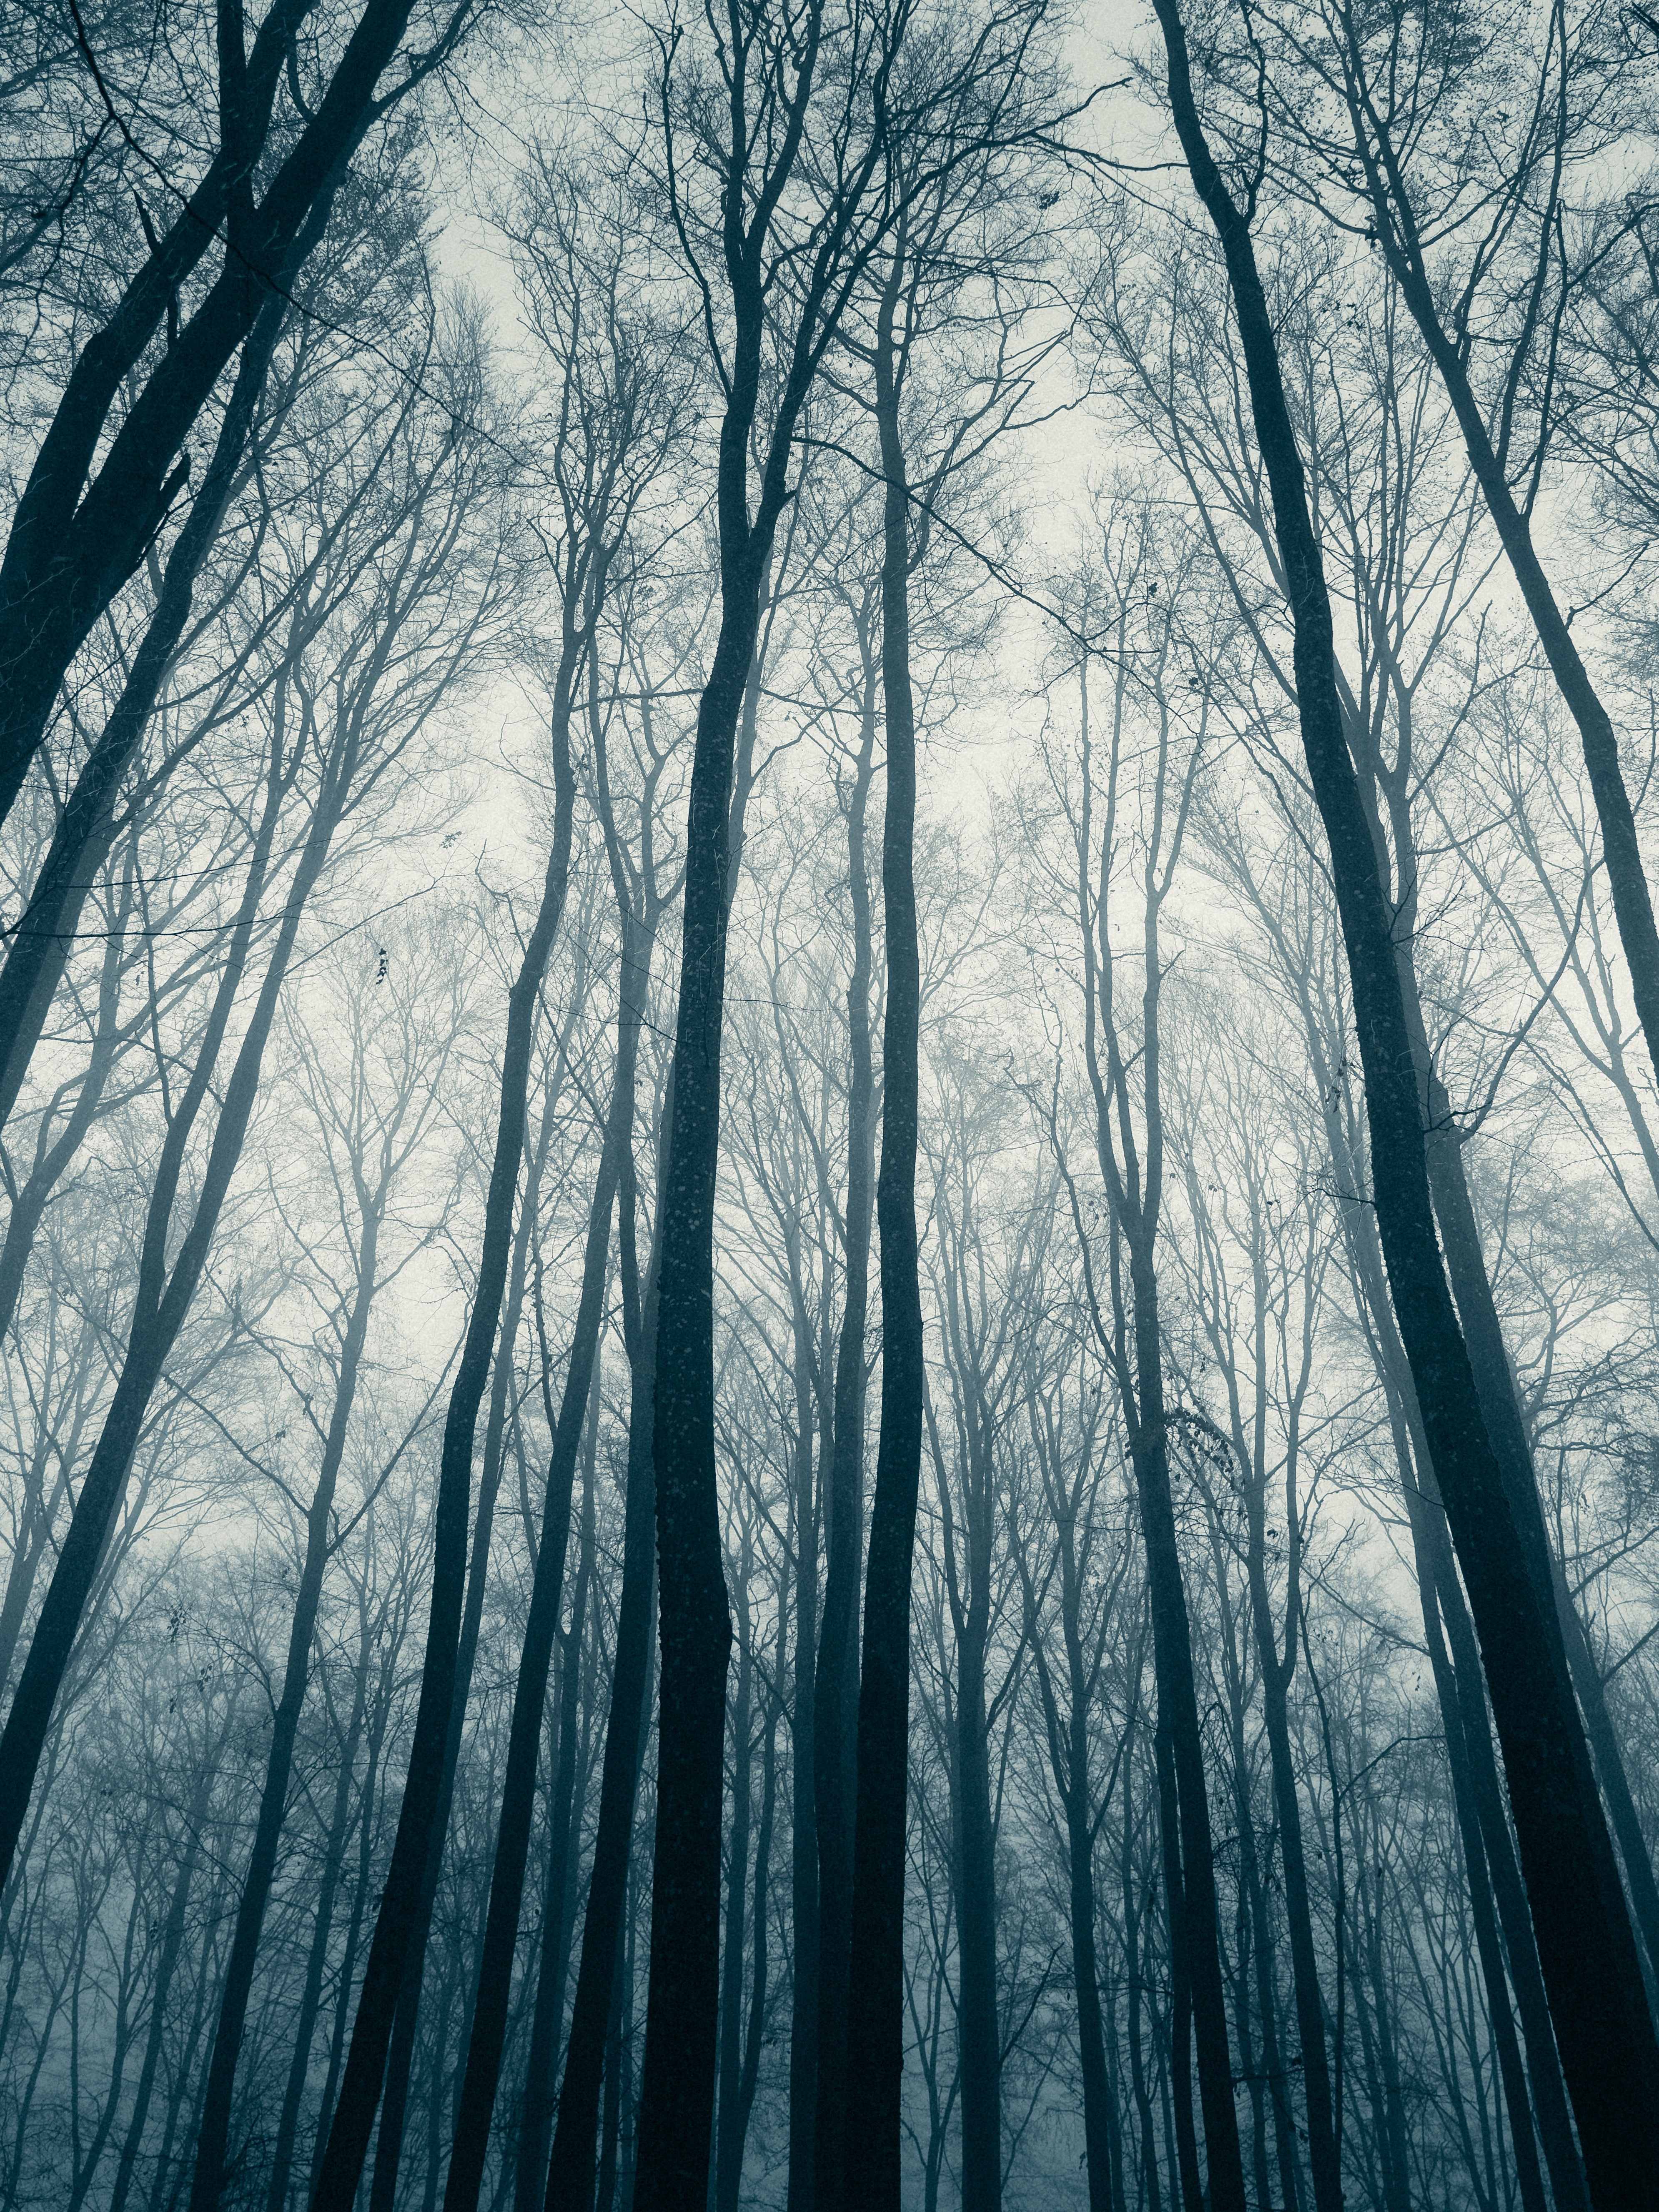 143529 descargar imagen naturaleza, árboles, bosque, niebla, calina, neblina: fondos de pantalla y protectores de pantalla gratis